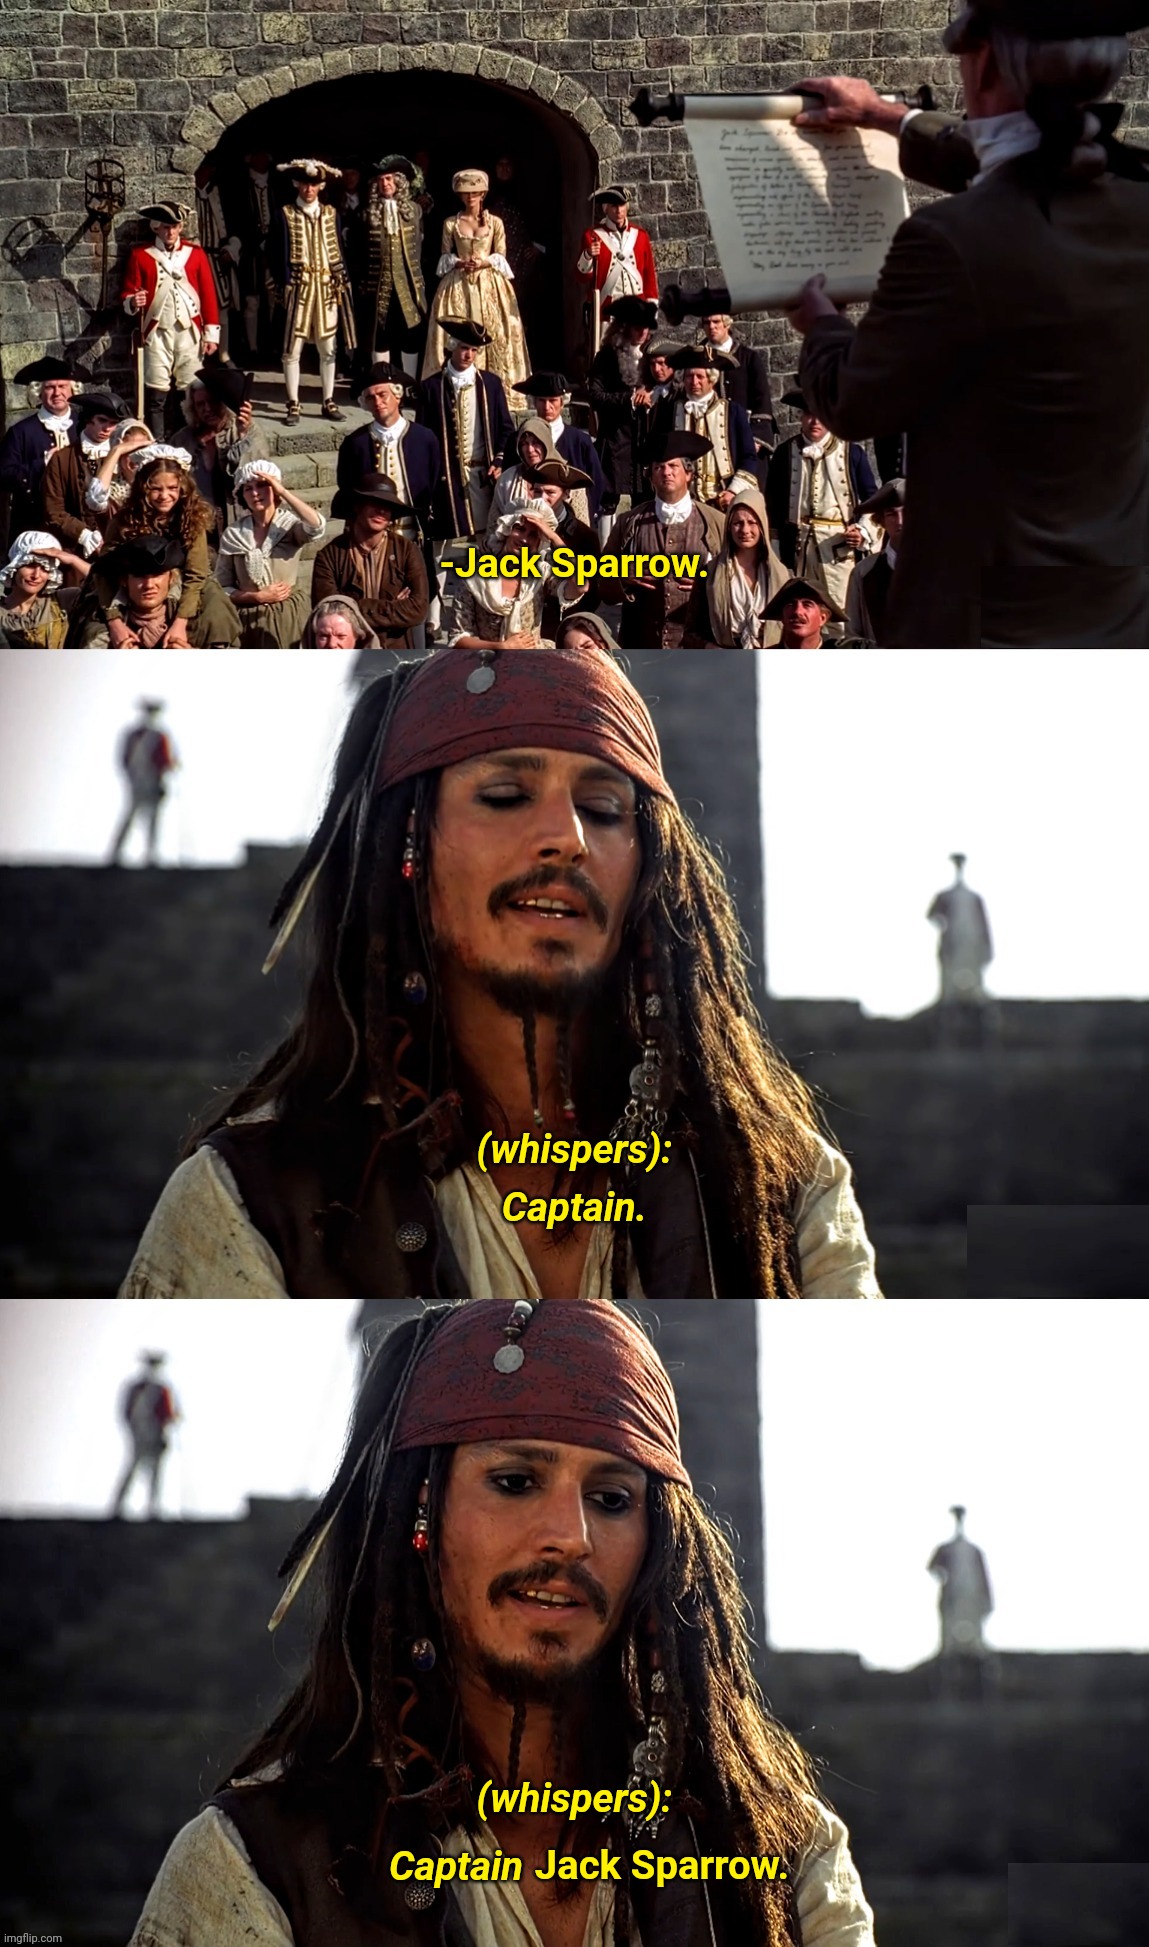 It's CAPTAIN Jack Sparrow | -Jack Sparrow. (whispers):; Captain. (whispers):; Captain; Jack Sparrow. | image tagged in it's captain jack sparrow,pirates of the caribbean,pirates,execution | made w/ Imgflip meme maker